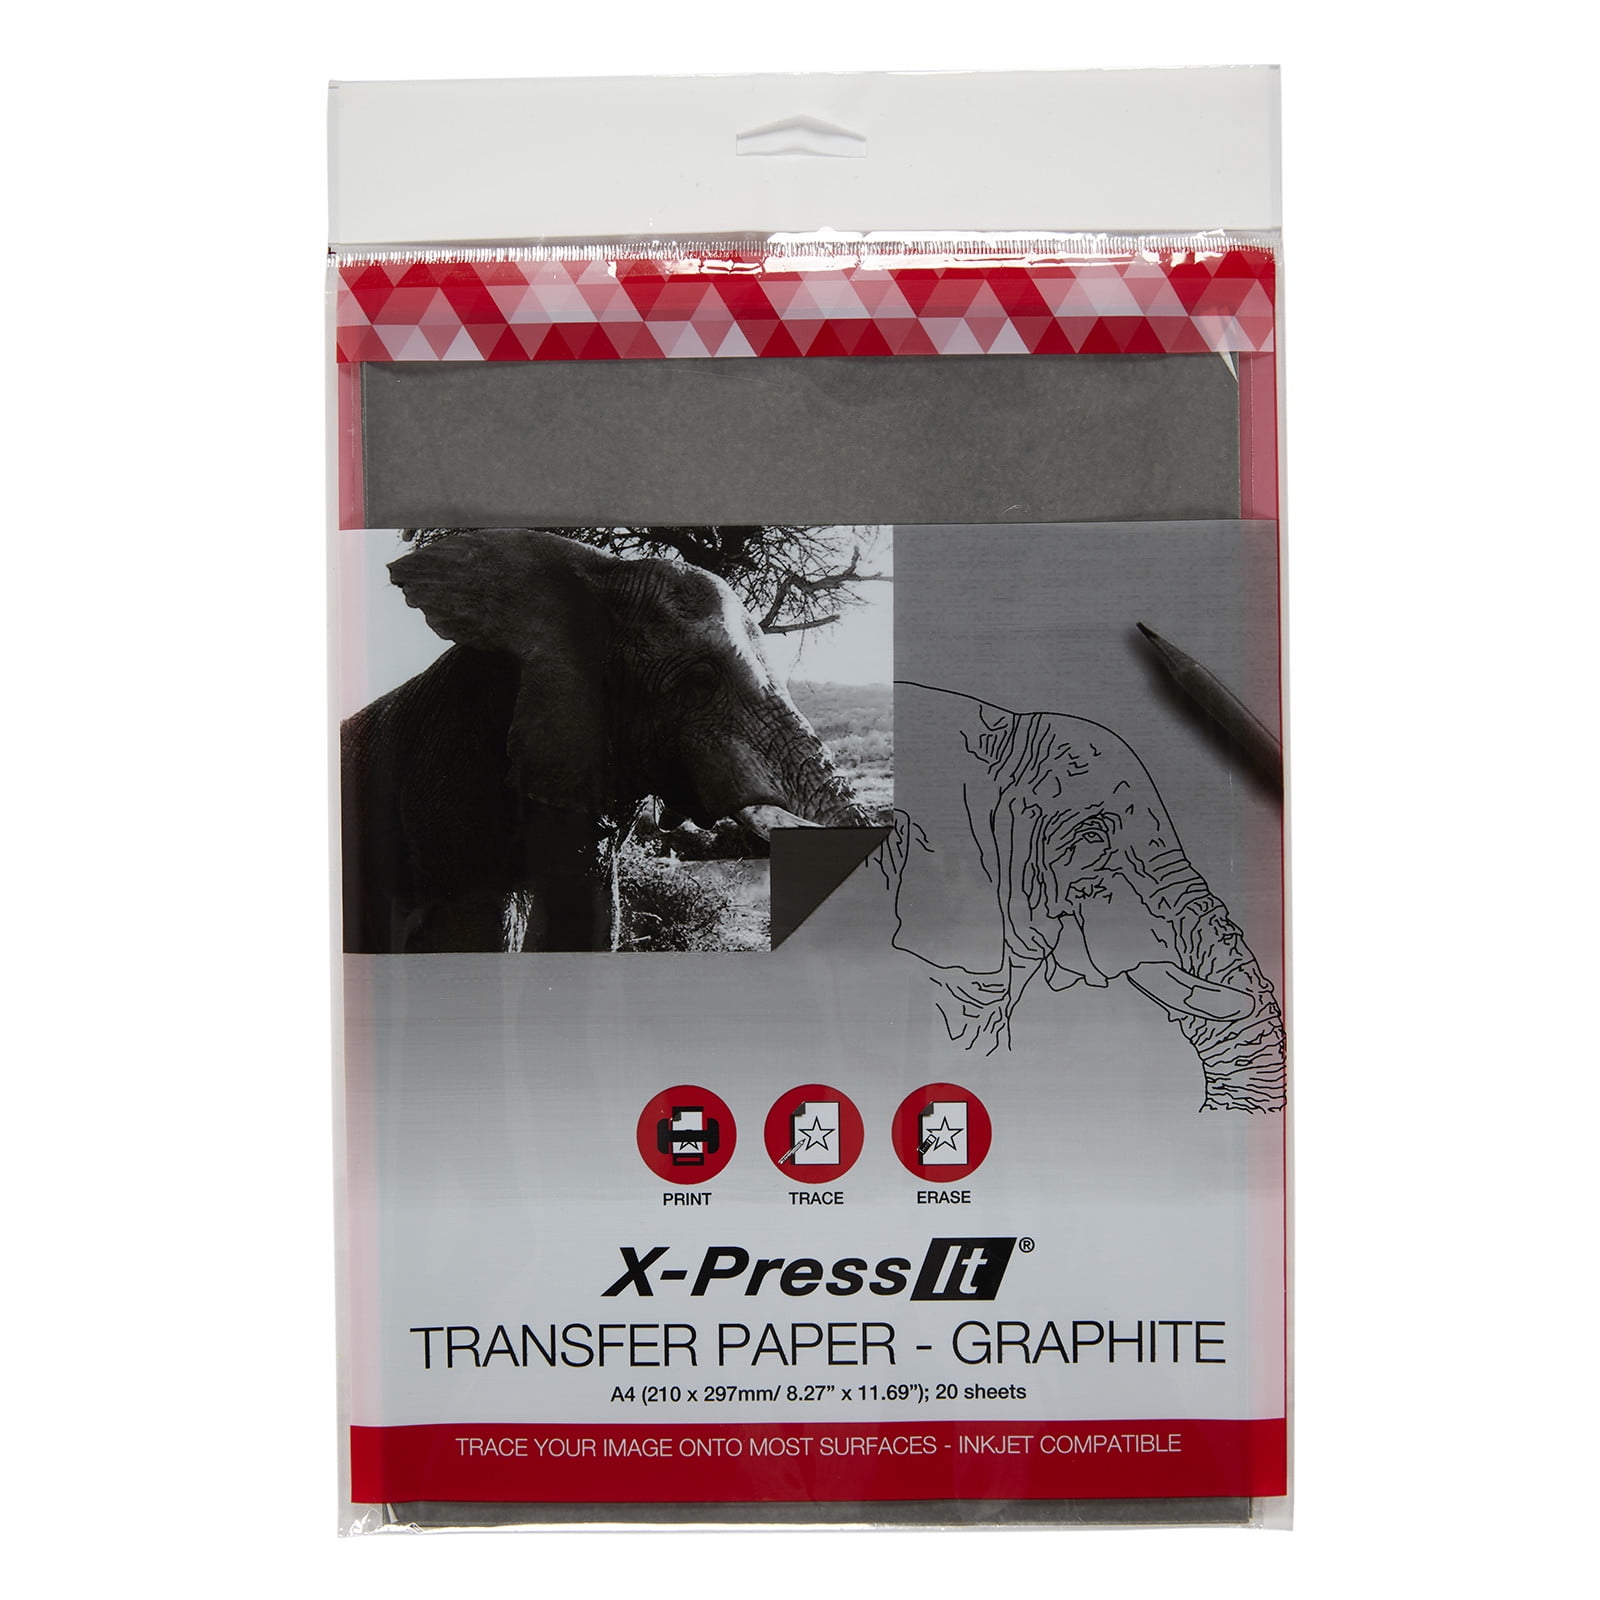 JET PRO Soft LIGHT Fabric A4 TRANSFER PAPER x5 HEAT PRESS INKJET PRINT US-MADE 